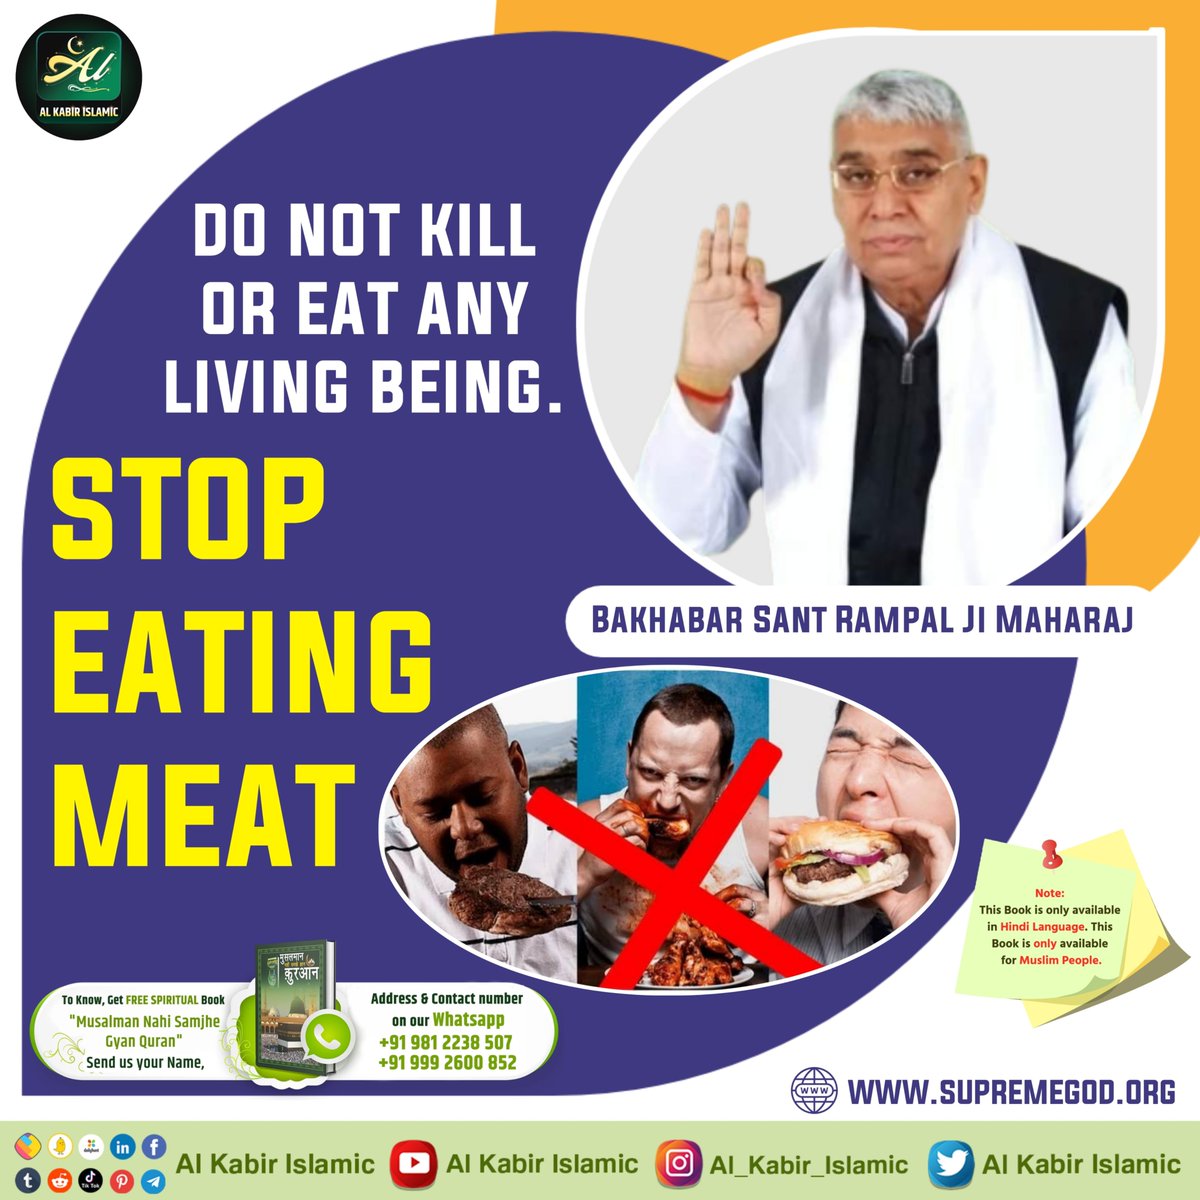 Stop eating meat!
Do not kill or eat any living being.
#AlKabir_Islamic
#SaintRampalJi